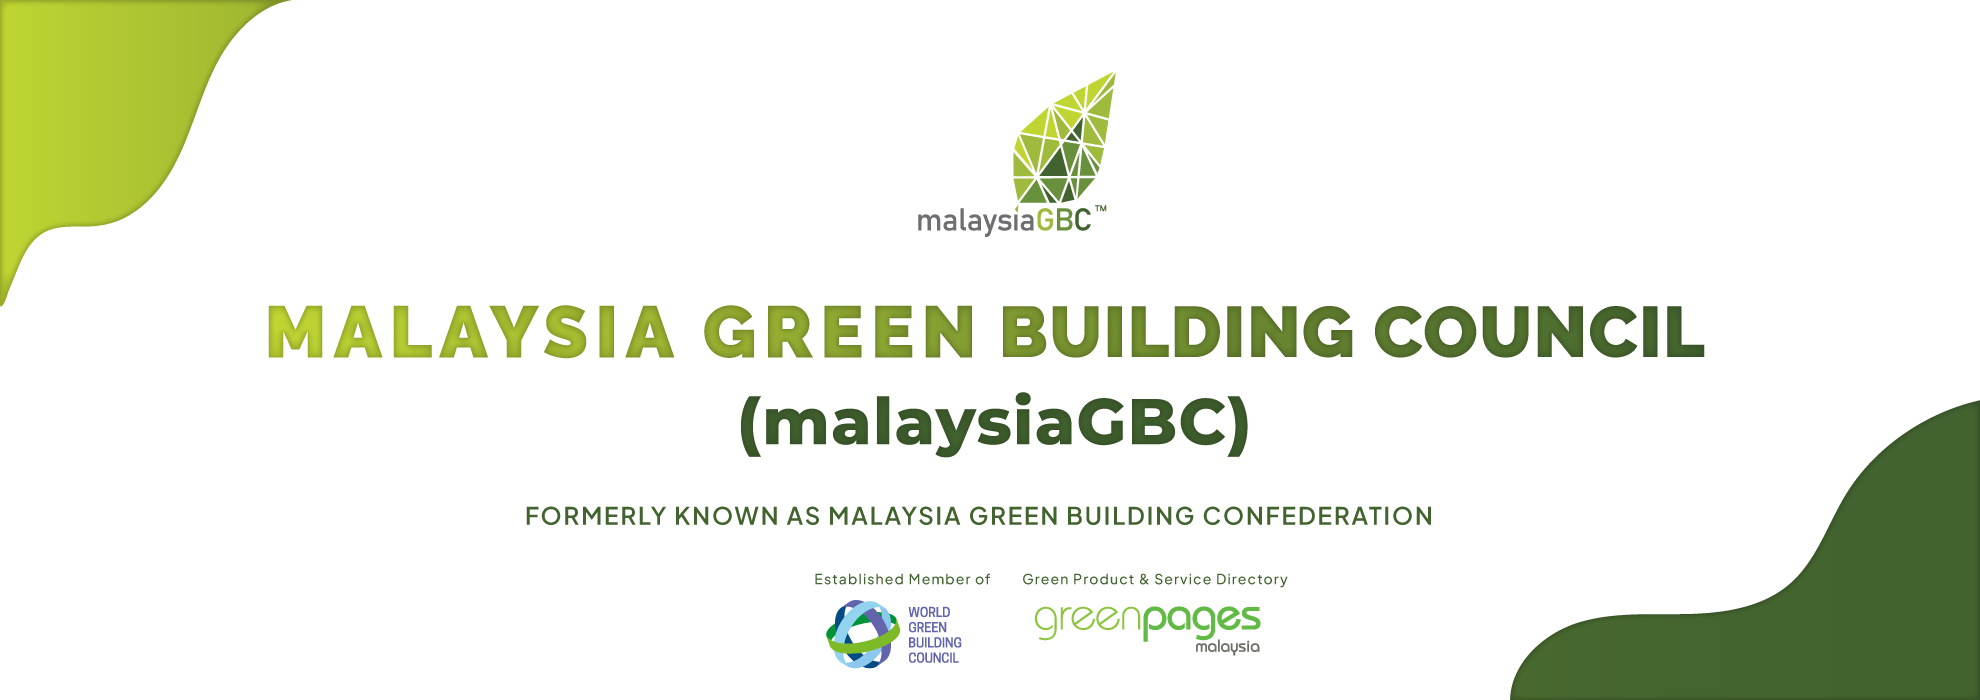 malaysiaGBC_Website-Banner